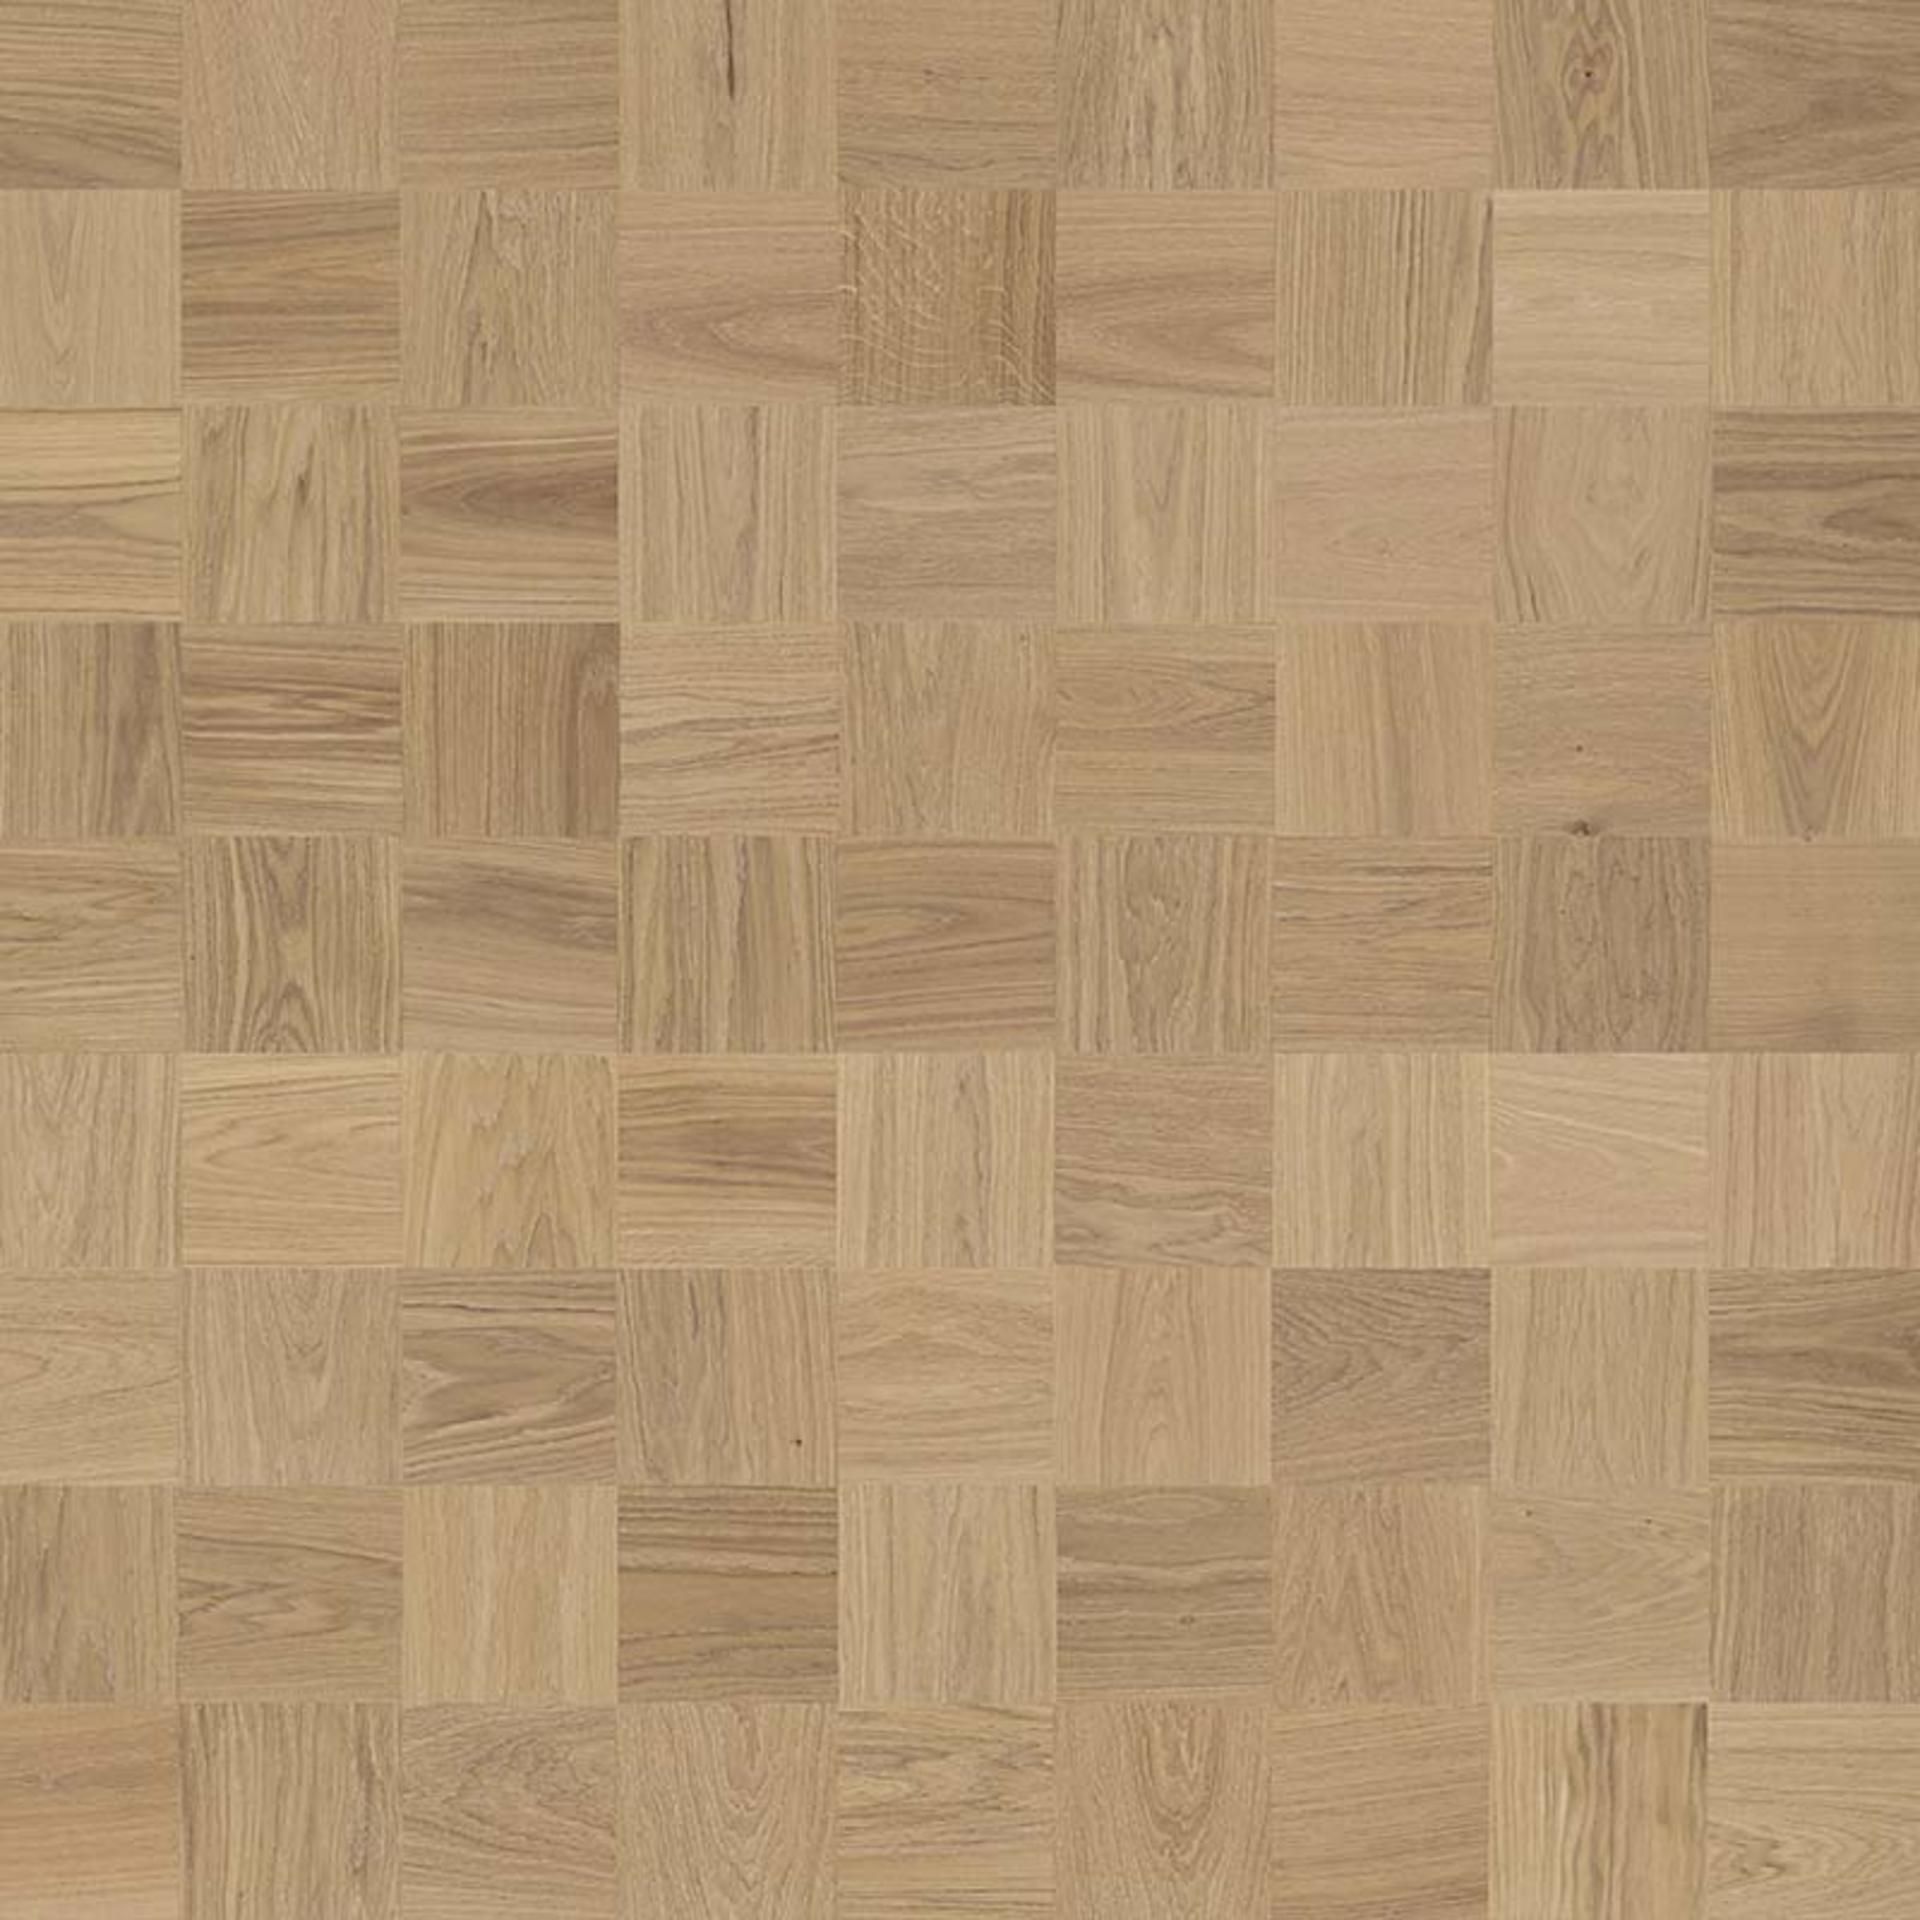 Holzboden Eiche Soho gebürstet Mosaik groß MADRID-TB15 Planke 190 x 2280 mm